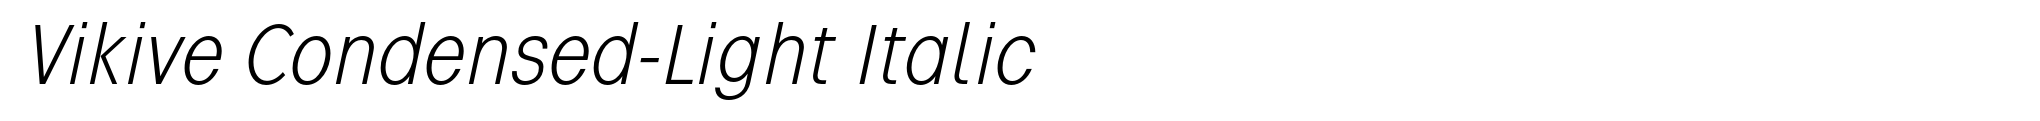 Vikive Condensed-Light Italic image